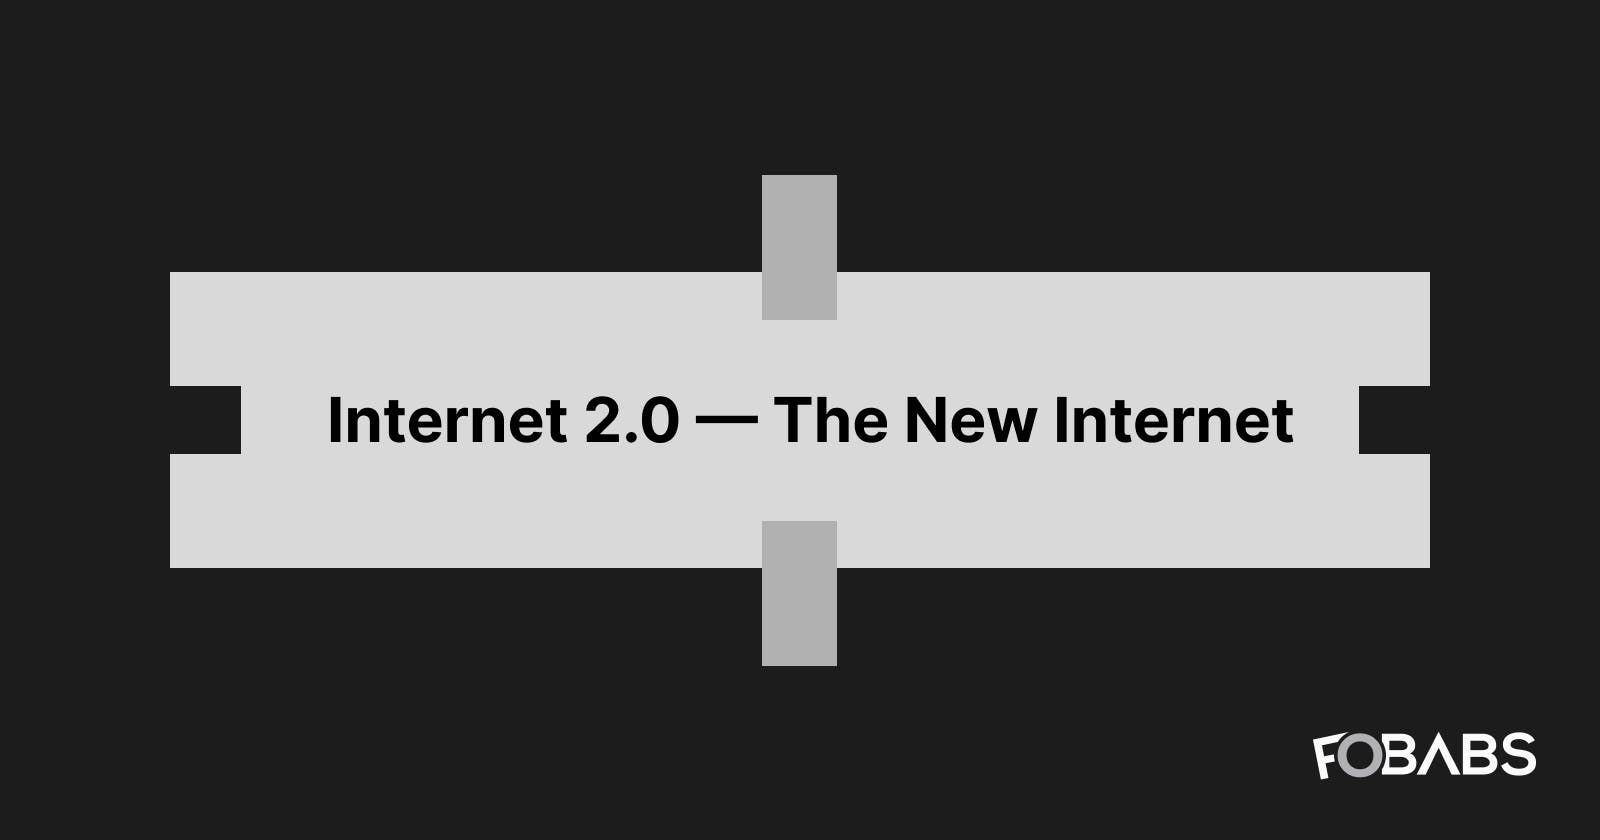 Internet 2.0 — The New Internet